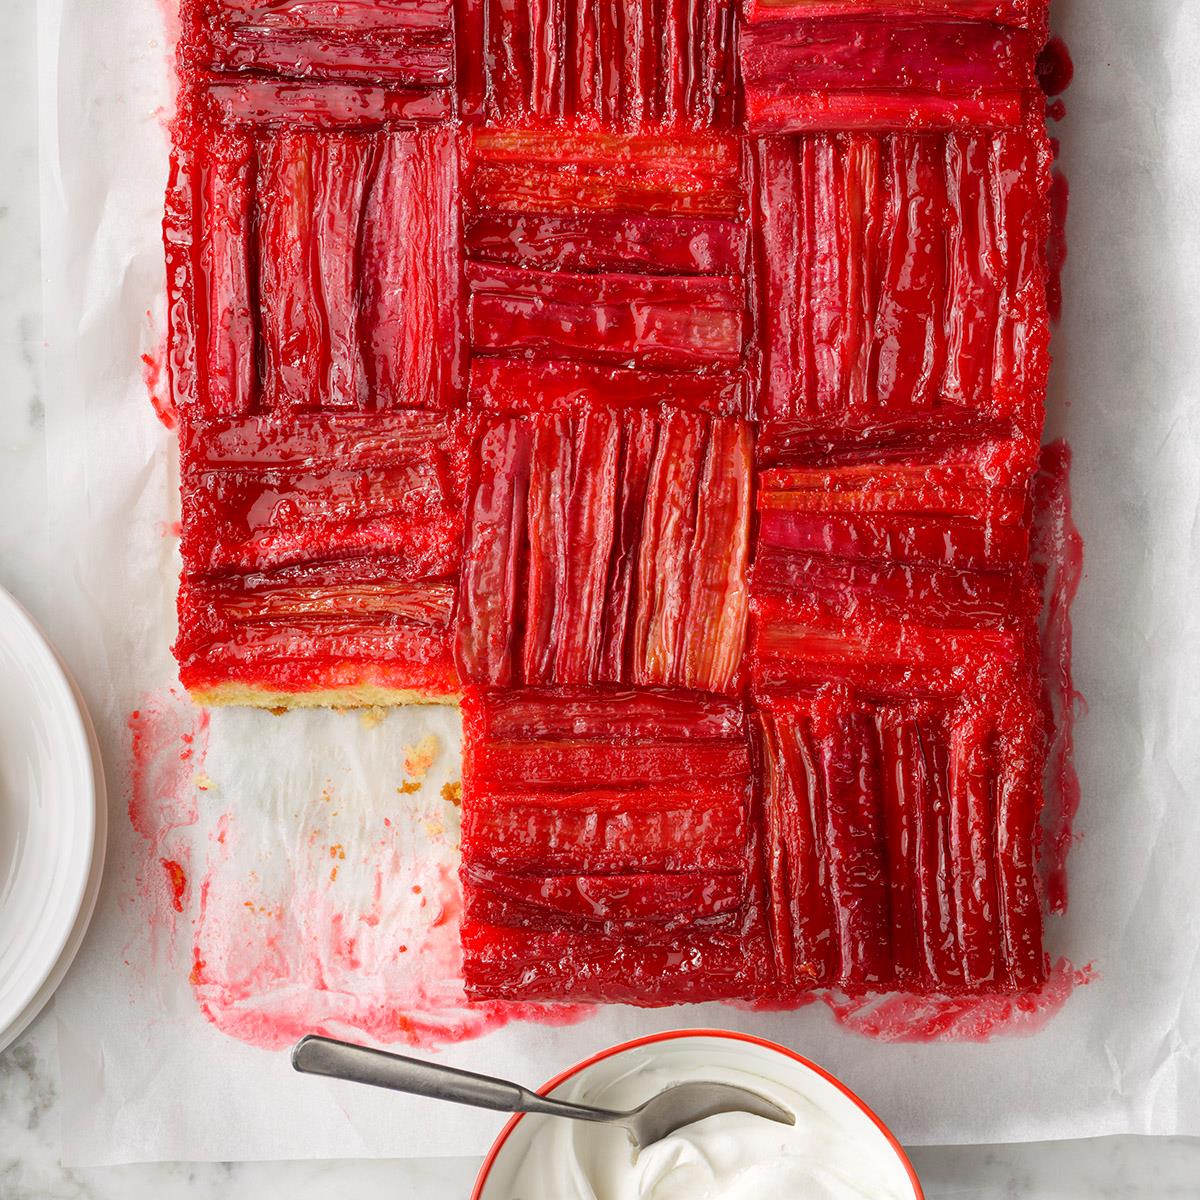 Strawberry Rhubarb Upside Down Cake Recipe How To Make It